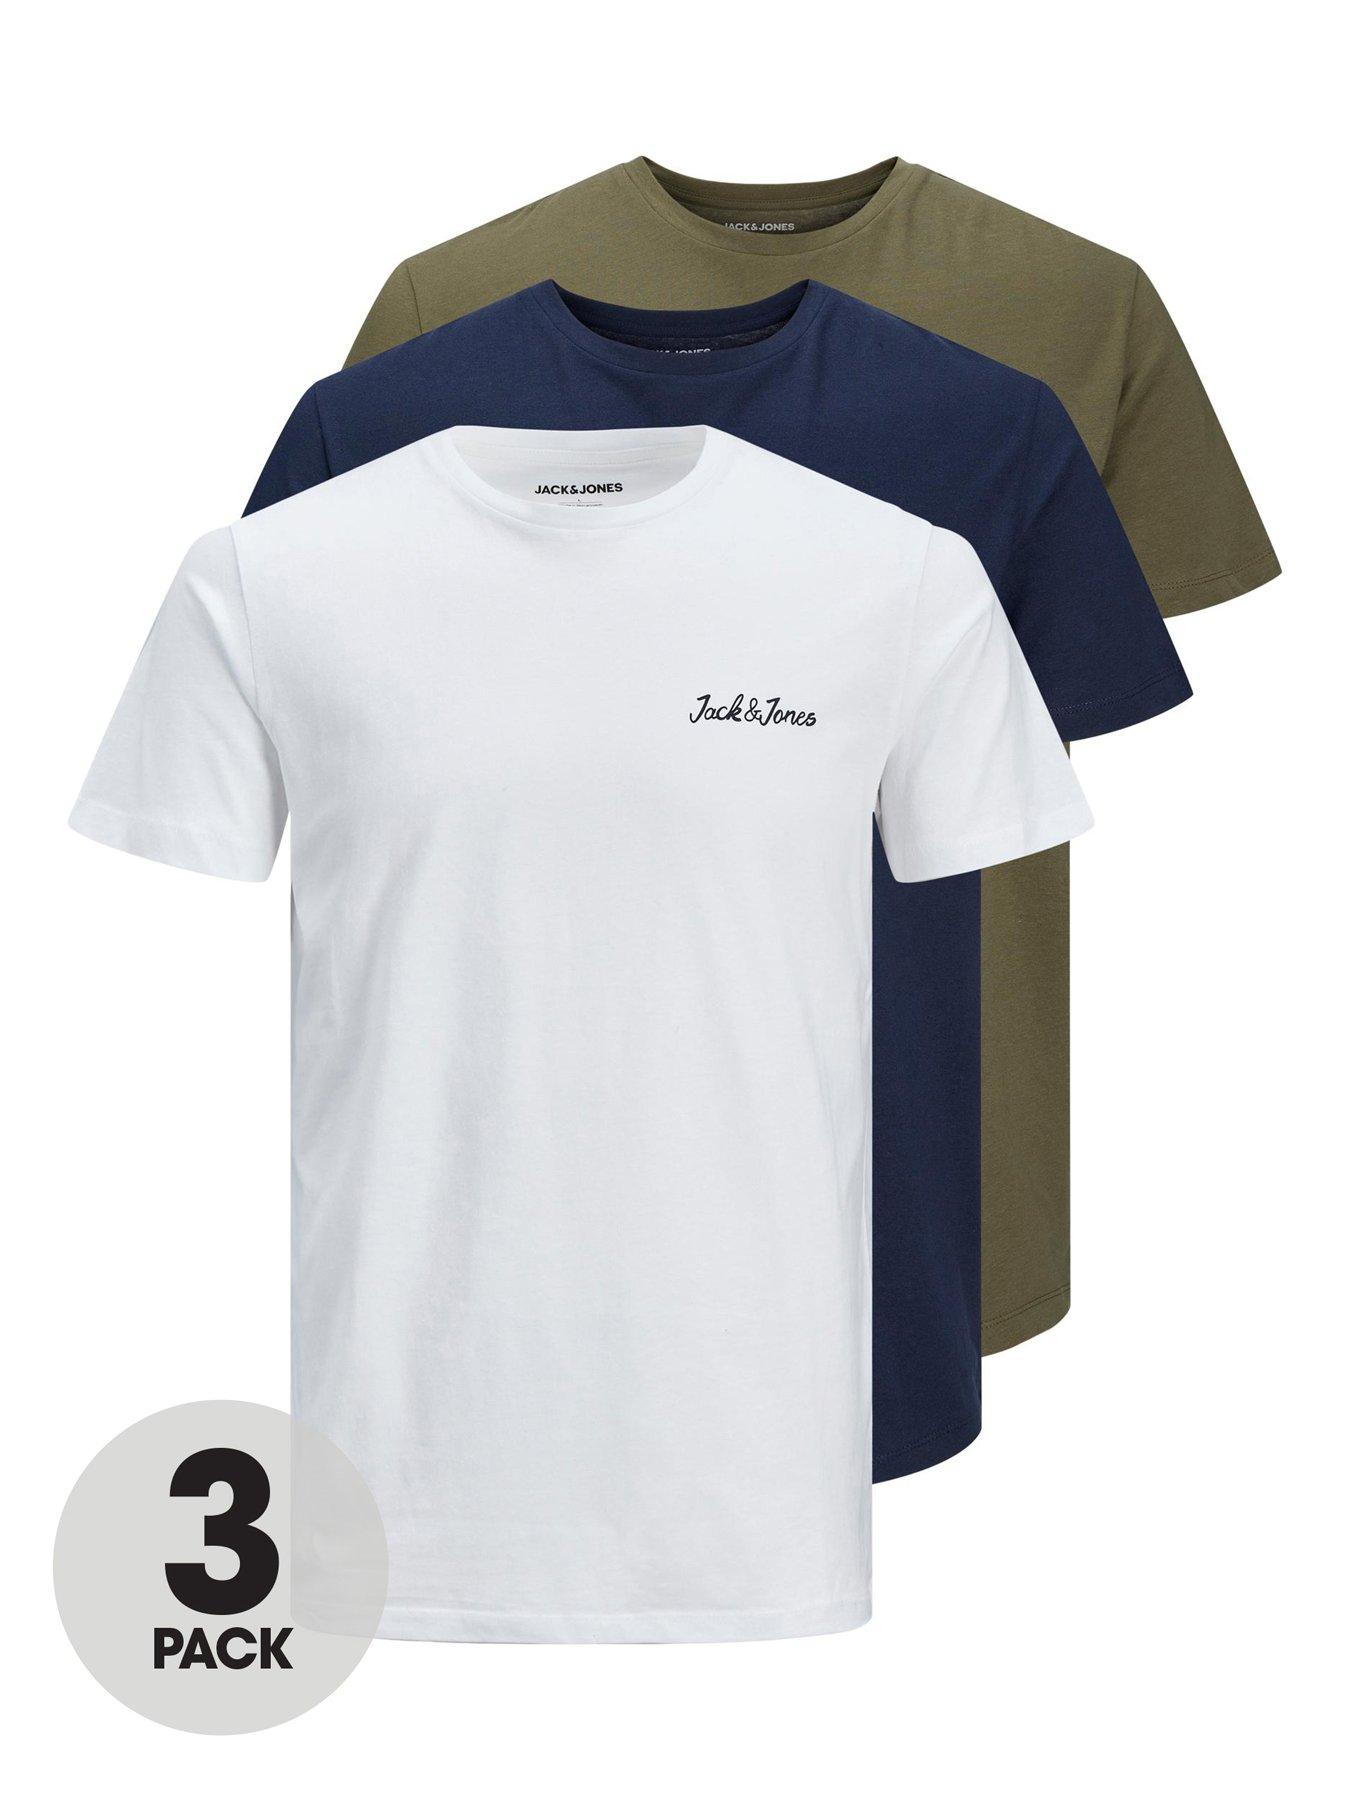  Boys 3 Pack Ewan Short Sleeve T-shirts - Navy/white/green